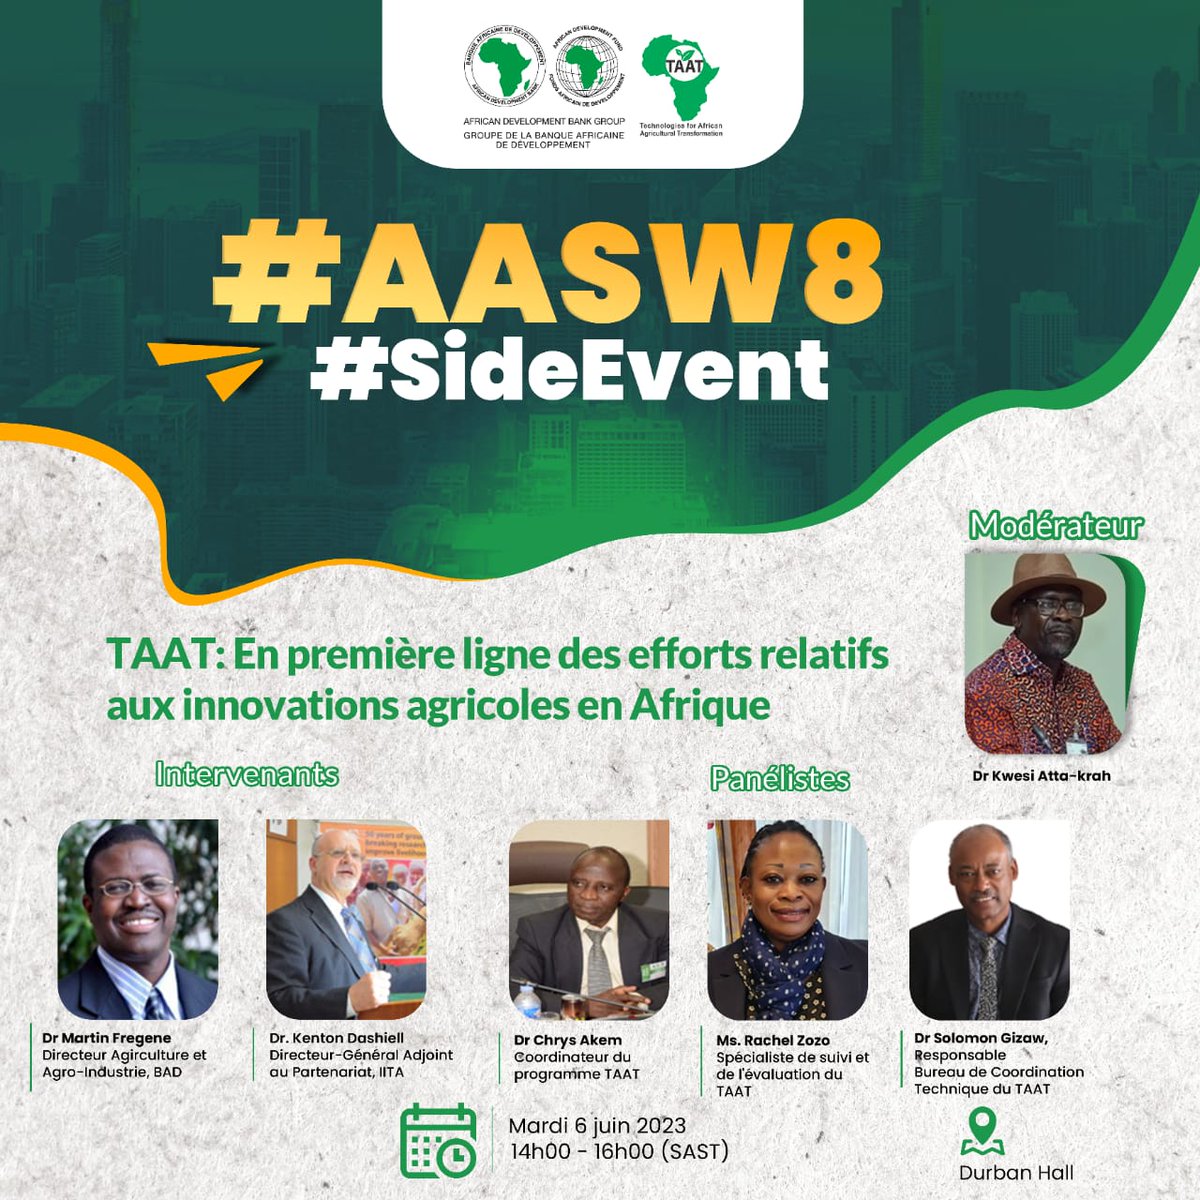 @Taat_Africa 
#AASW8 #SideEvent 'TAAT: en première ligne des efforts rélatifs aux innovations agricoles en Afrique' @AfDB_Group @FARAinfo  @IITA_CGIAR @mfregene77